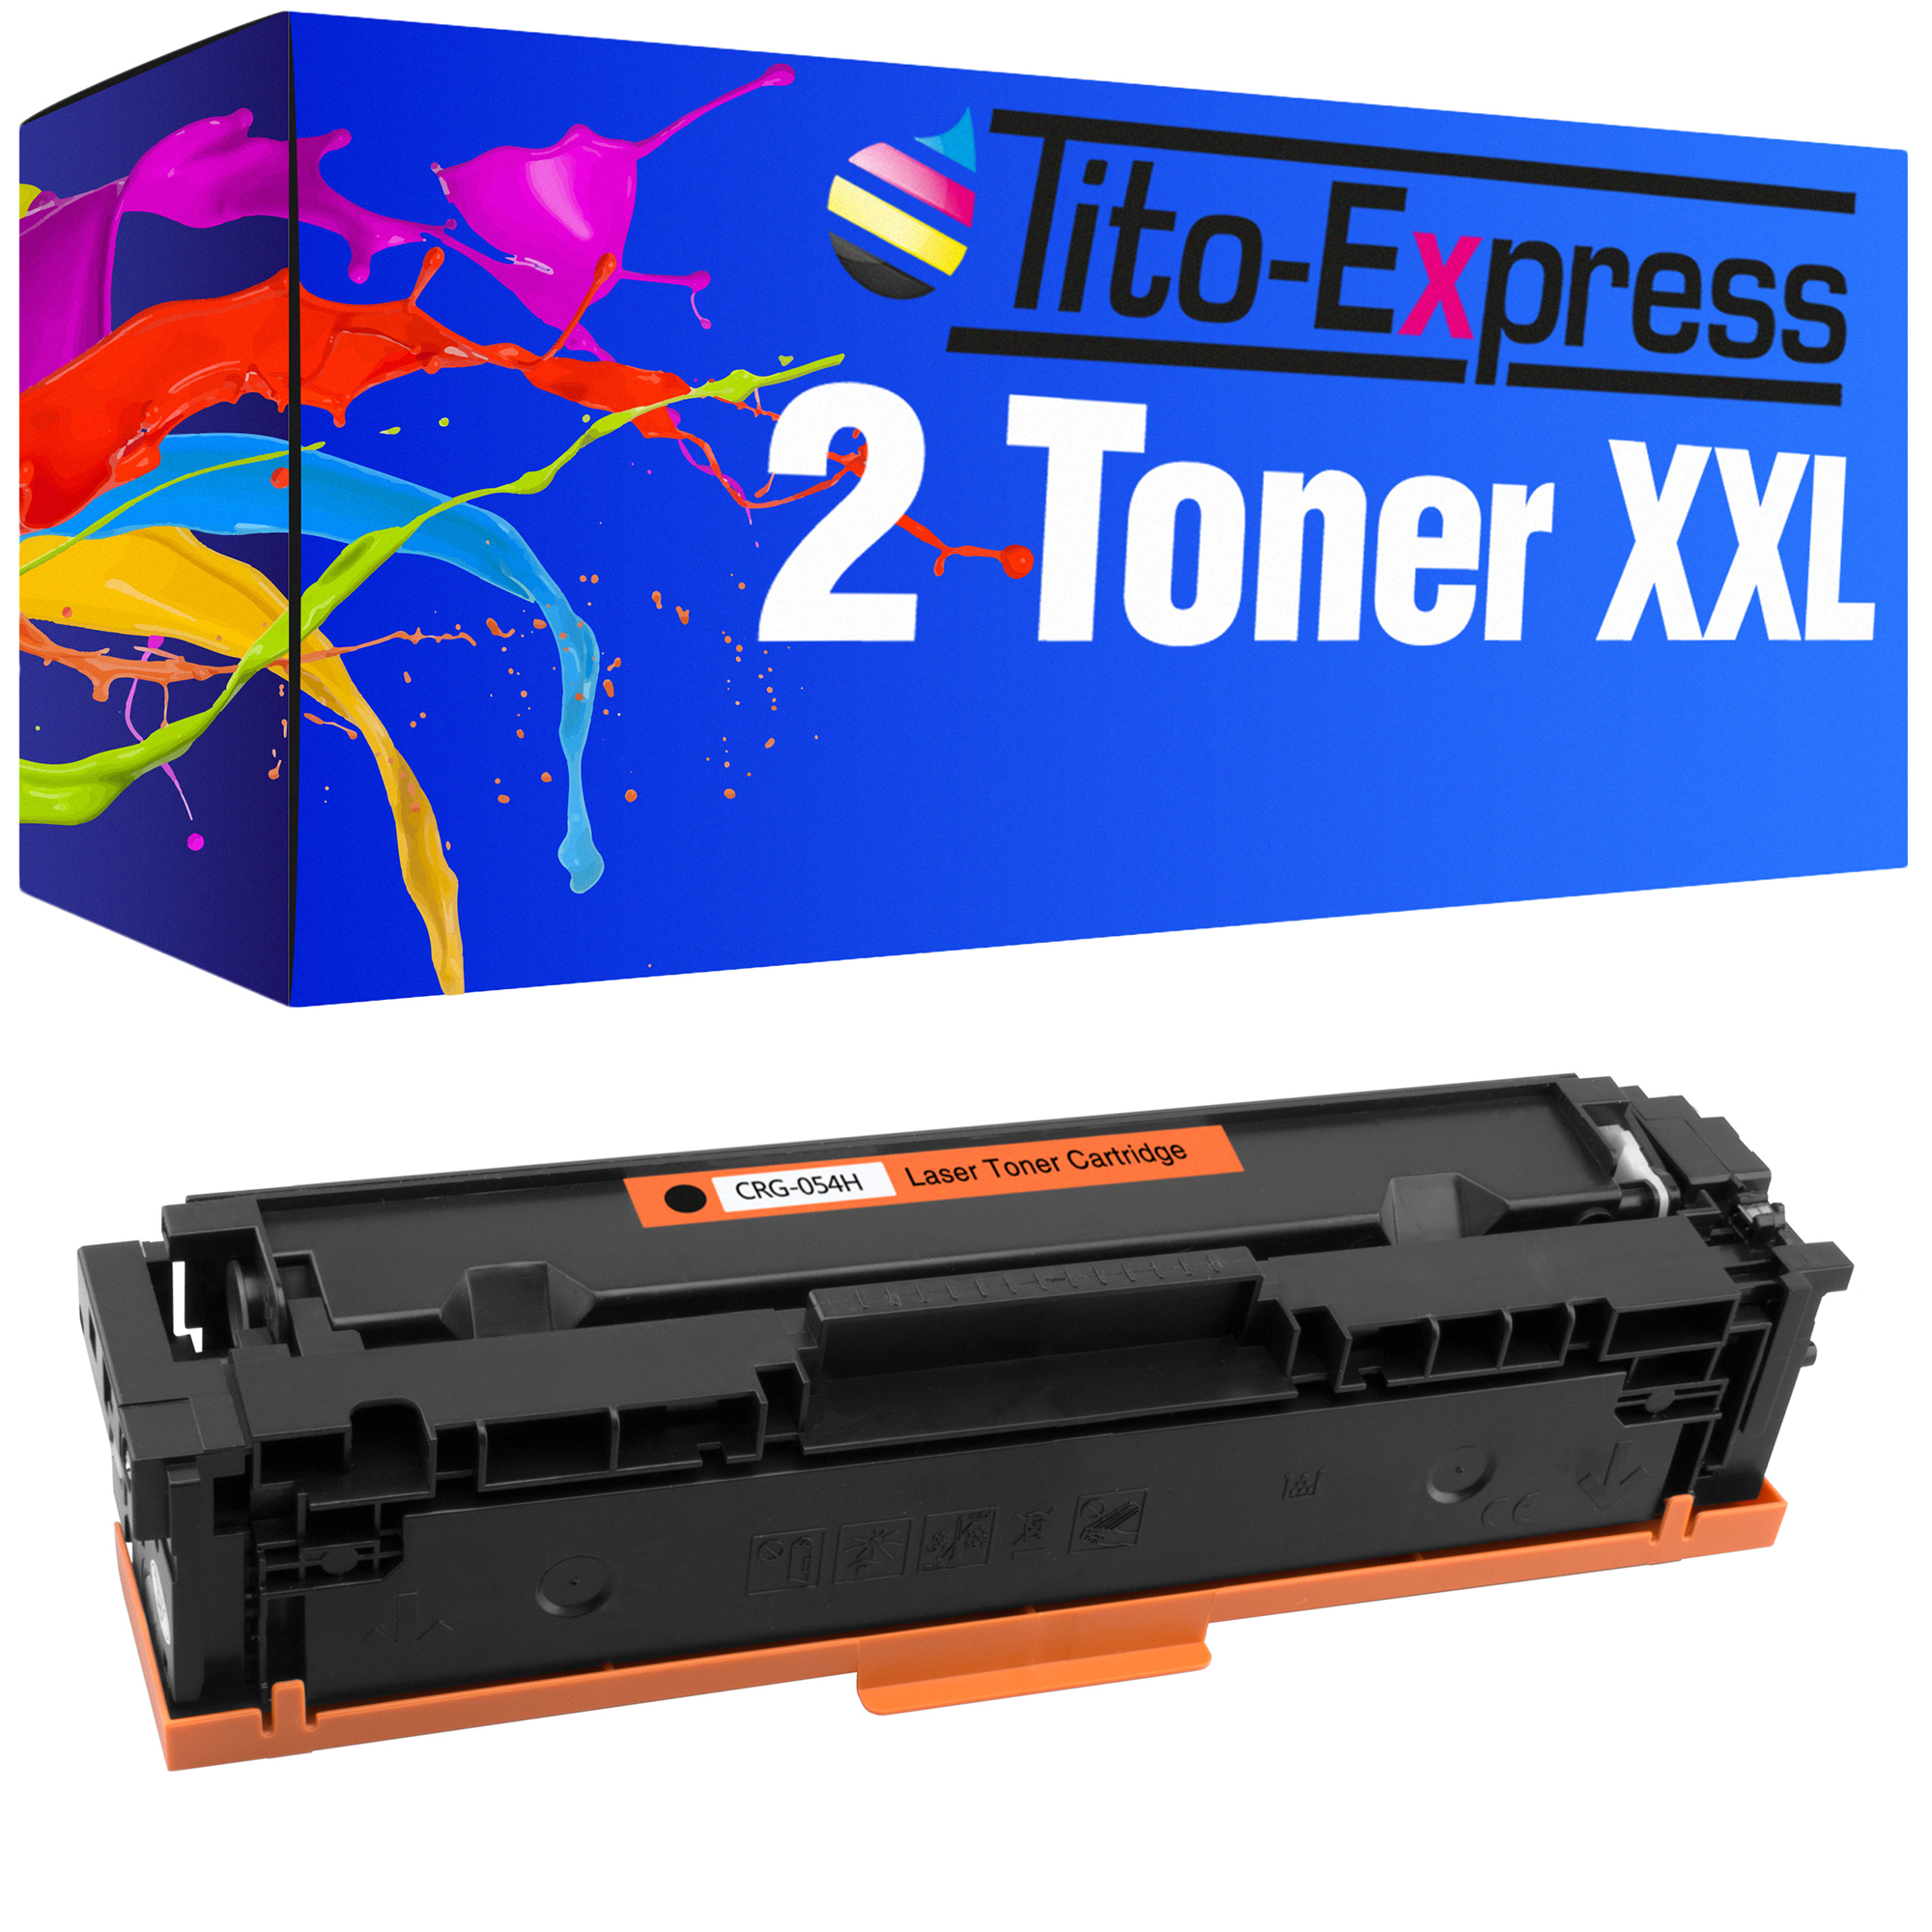 2 Toner (3028C002) TITO-EXPRESS black PLATINUMSERIE Toner ersetzt Canon CRG-054H